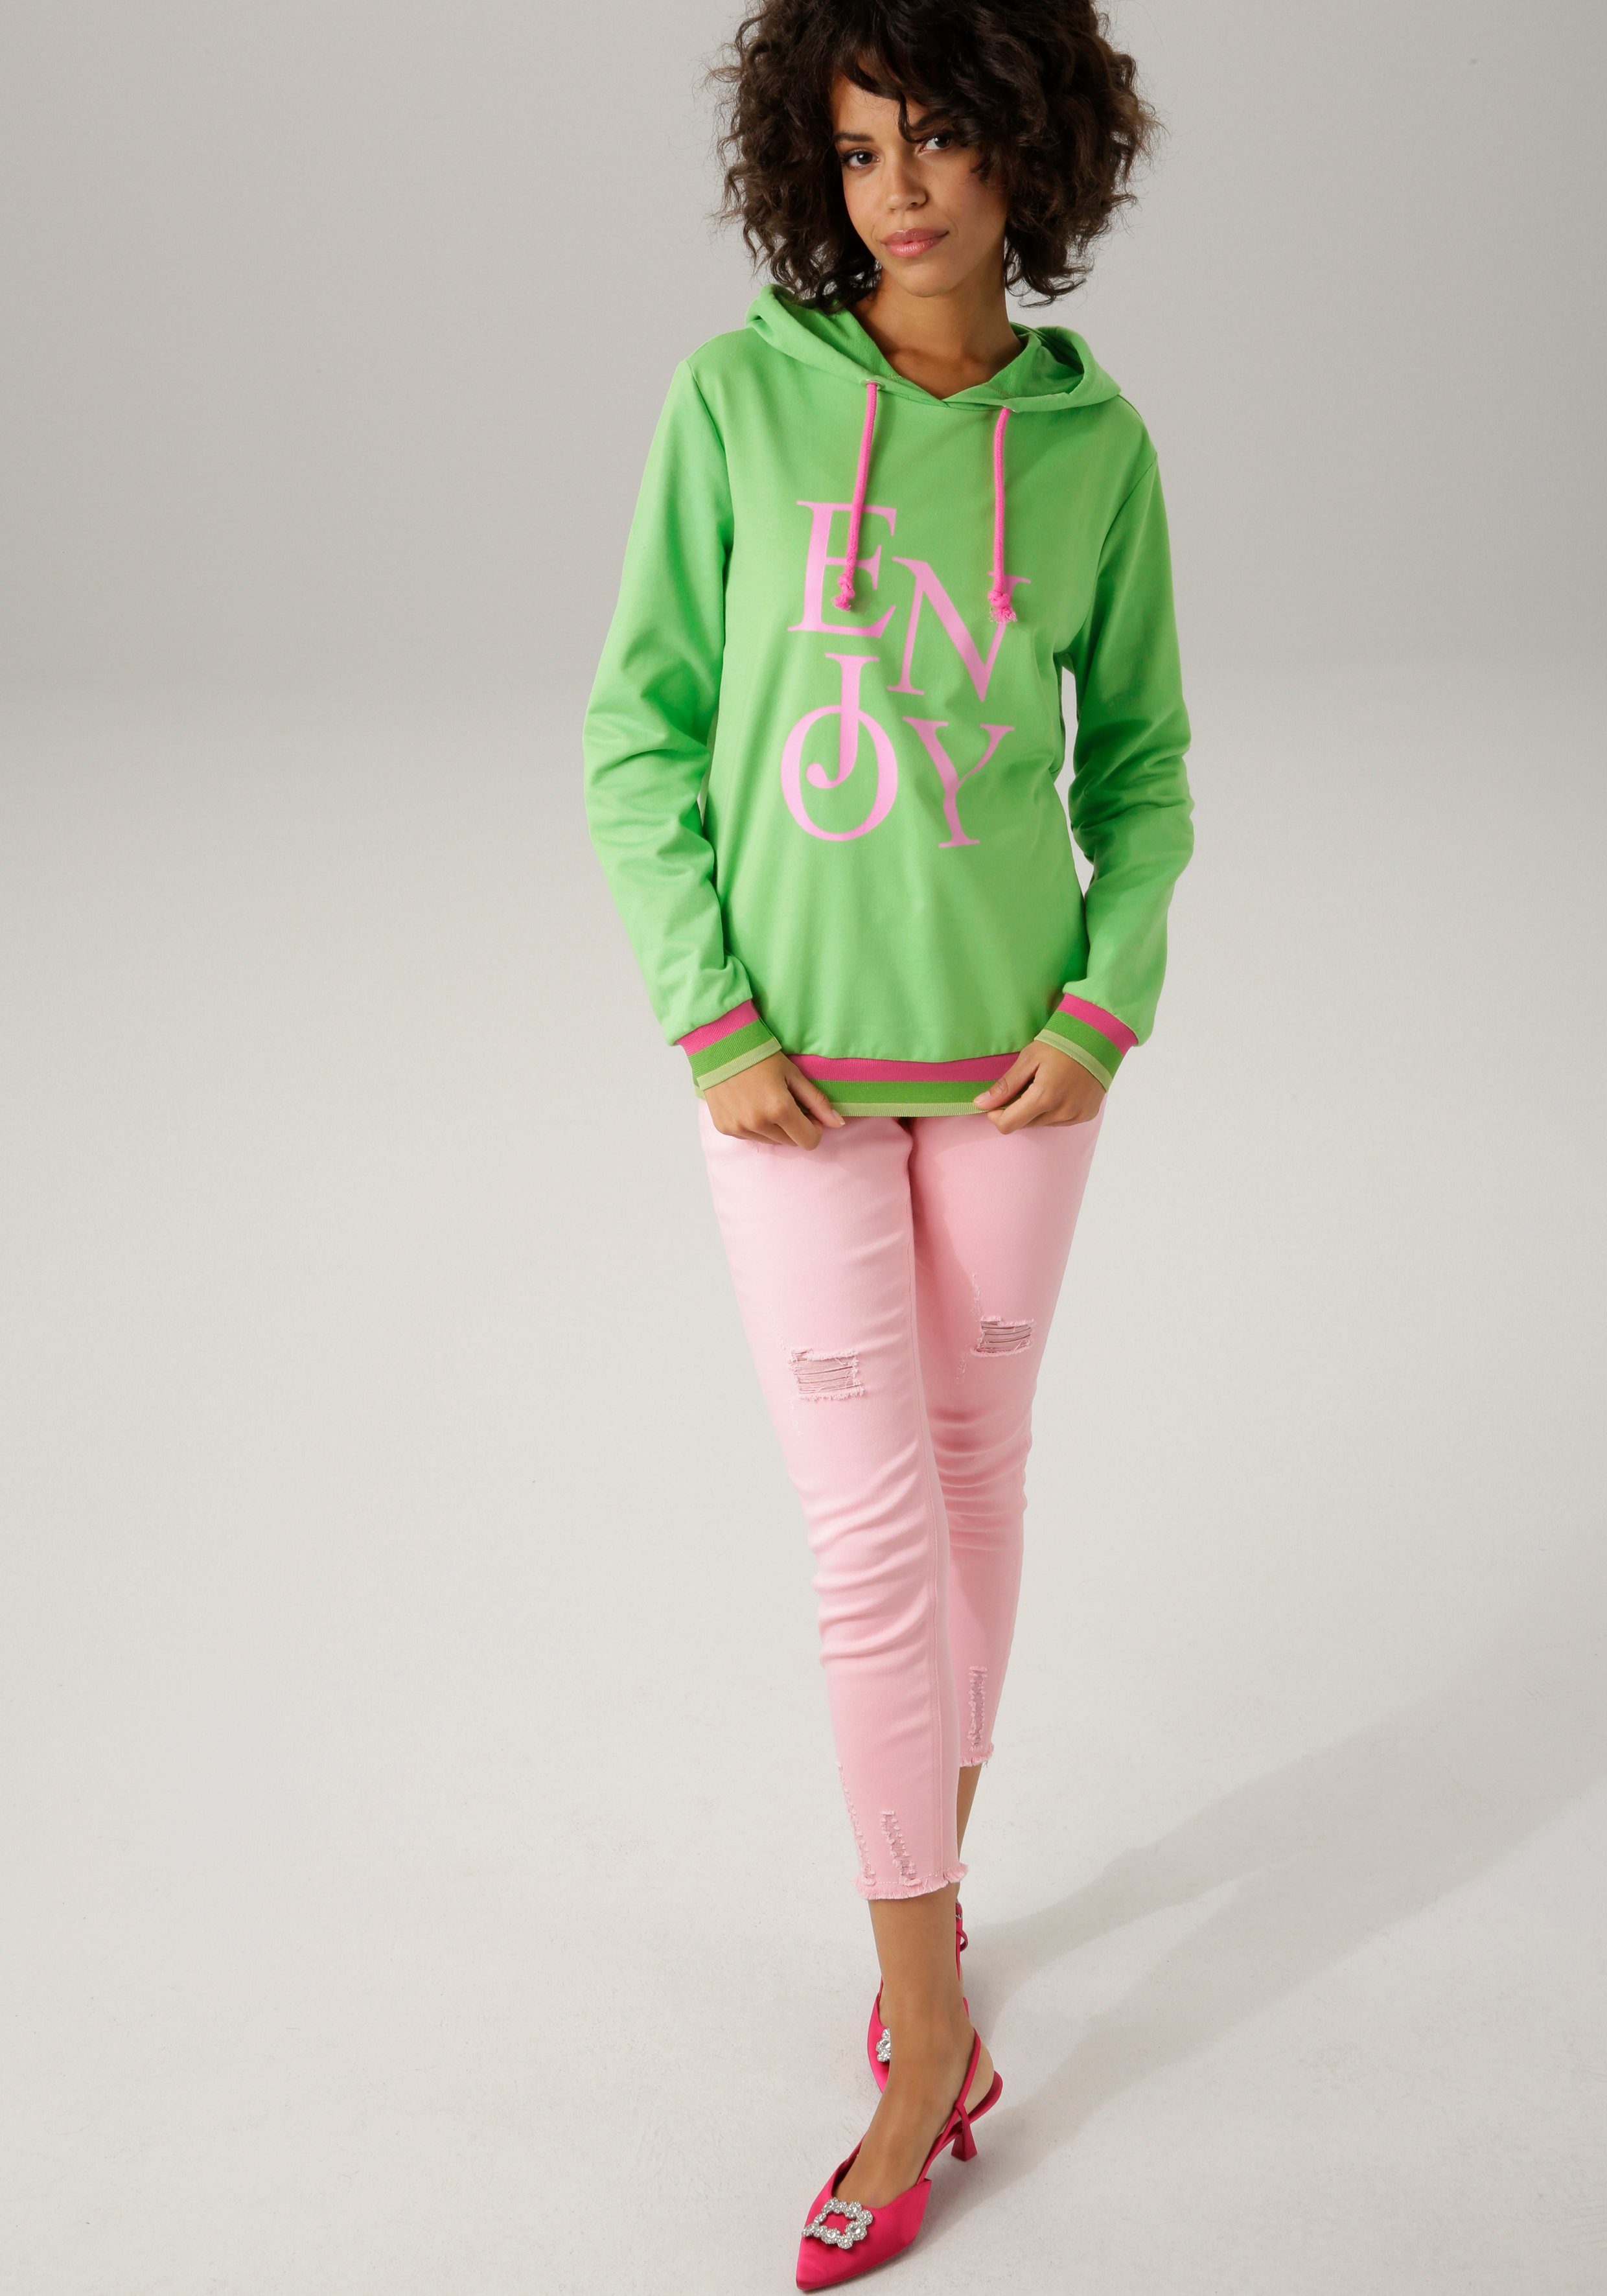 apfelgrün-rosa-pink-moosgrün-hellgrün mit CASUAL Aniston Sweatshirt "ENJOY"-Schriftzug